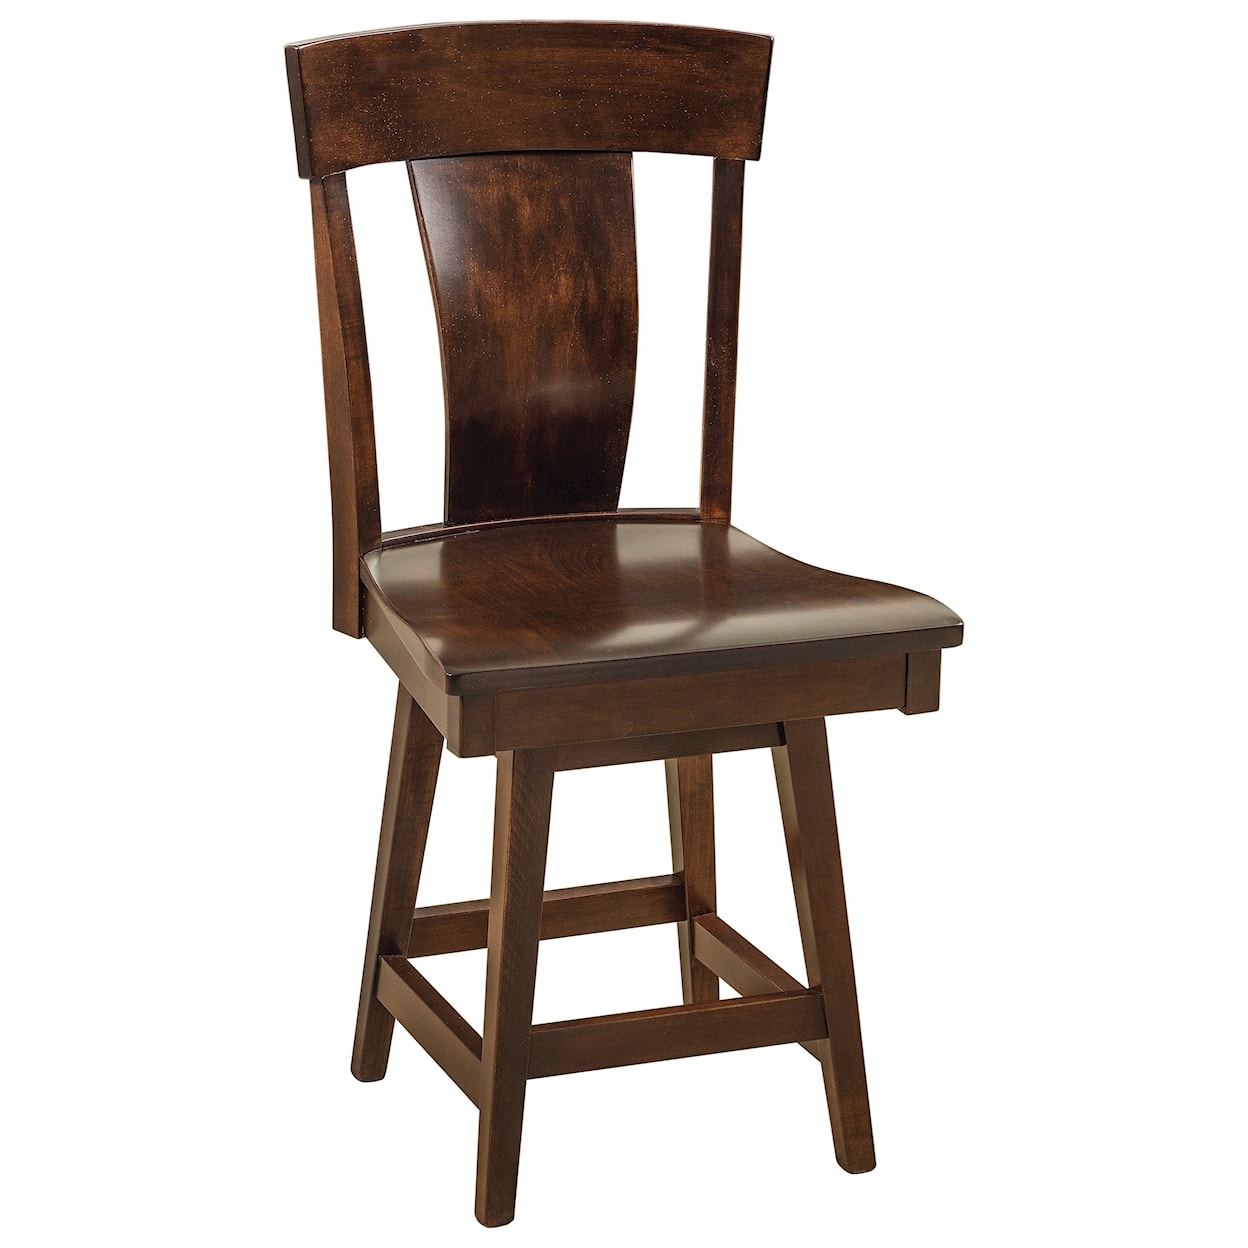 F&N Woodworking Baldwin Swivel Counter Height Stool - Leather Seat